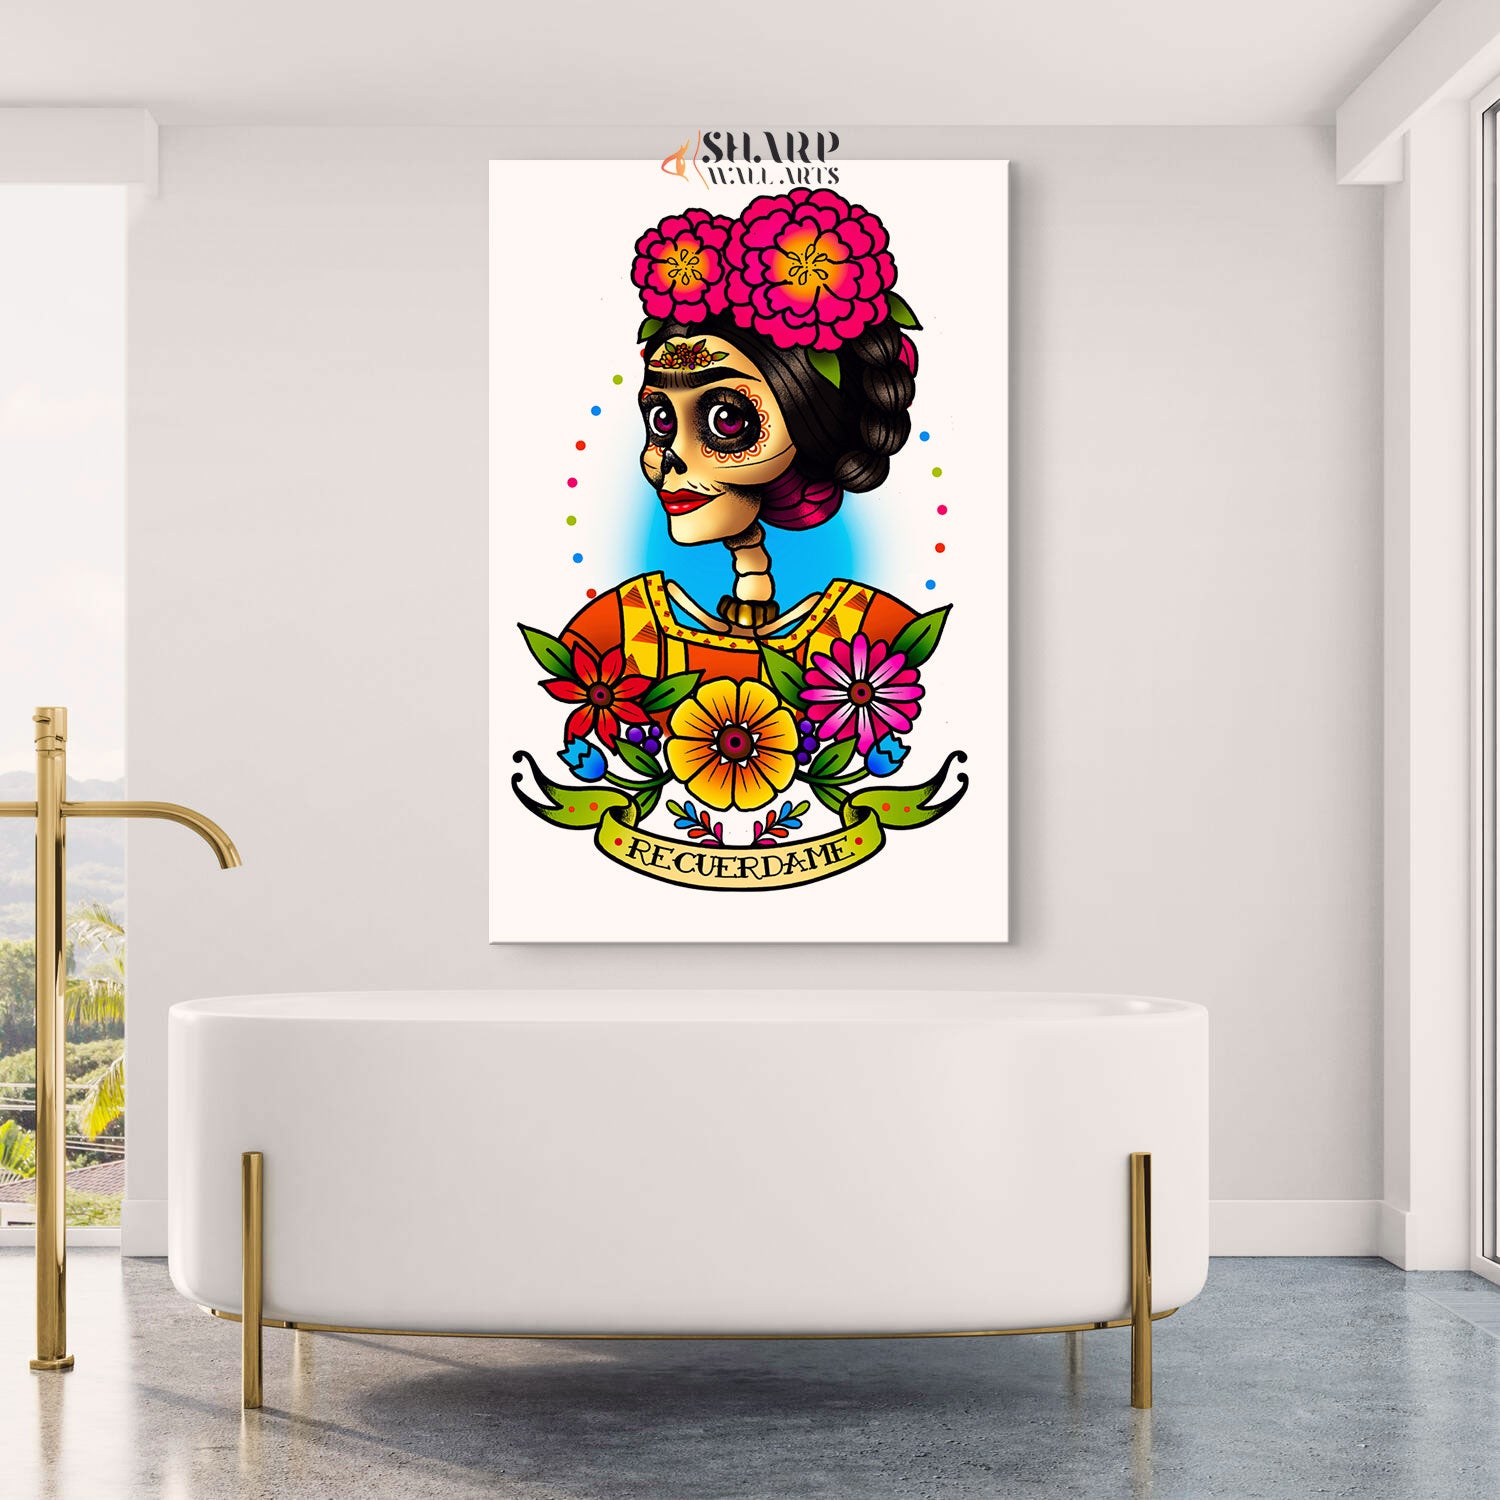 Frida Kahlo Recuerdame Canvas Wall Art